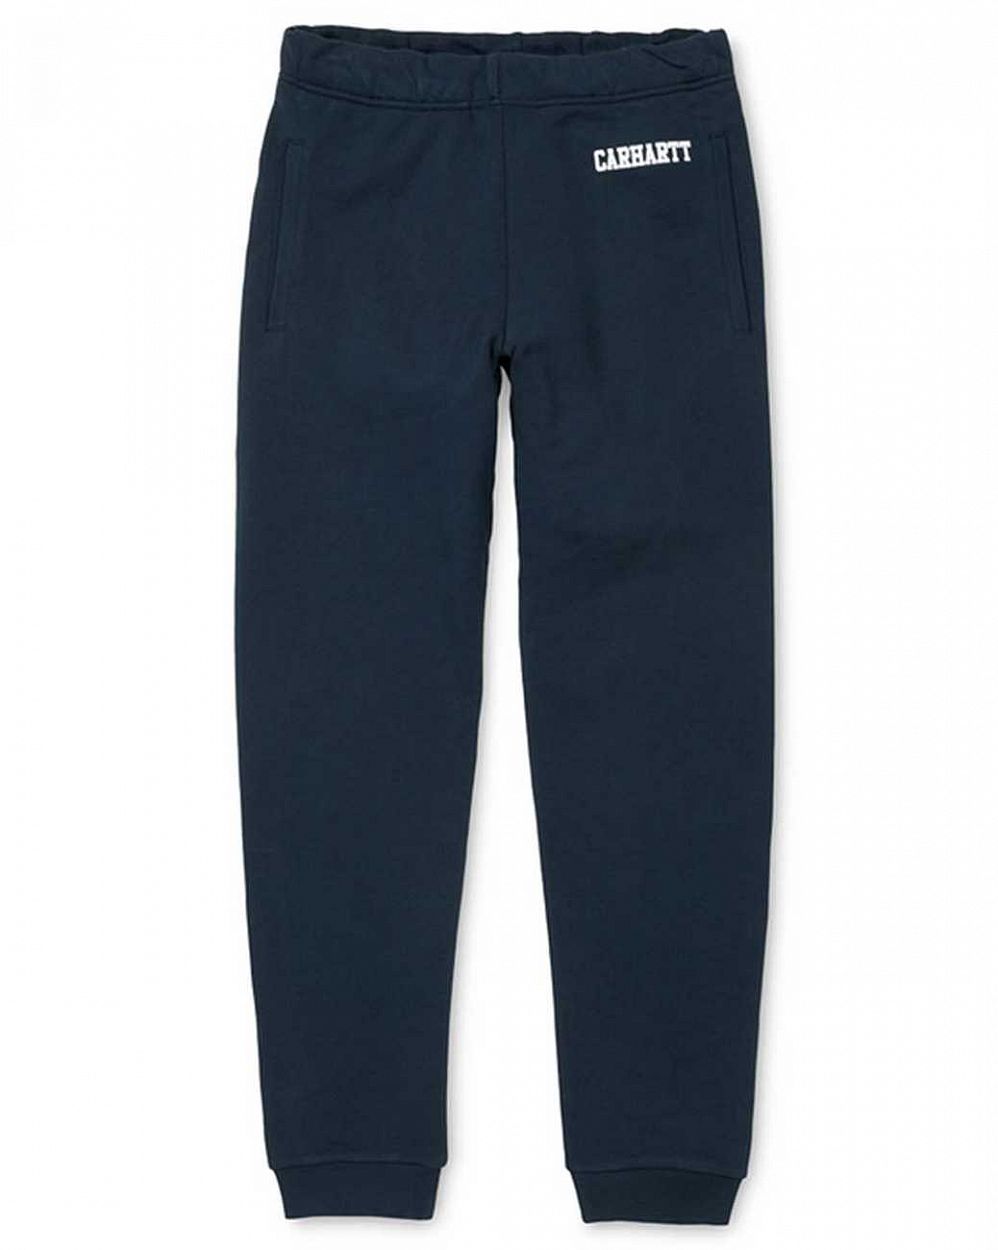 Спортивные штаны на резинке Carhartt WIP College Sweat Pant Navy отзывы